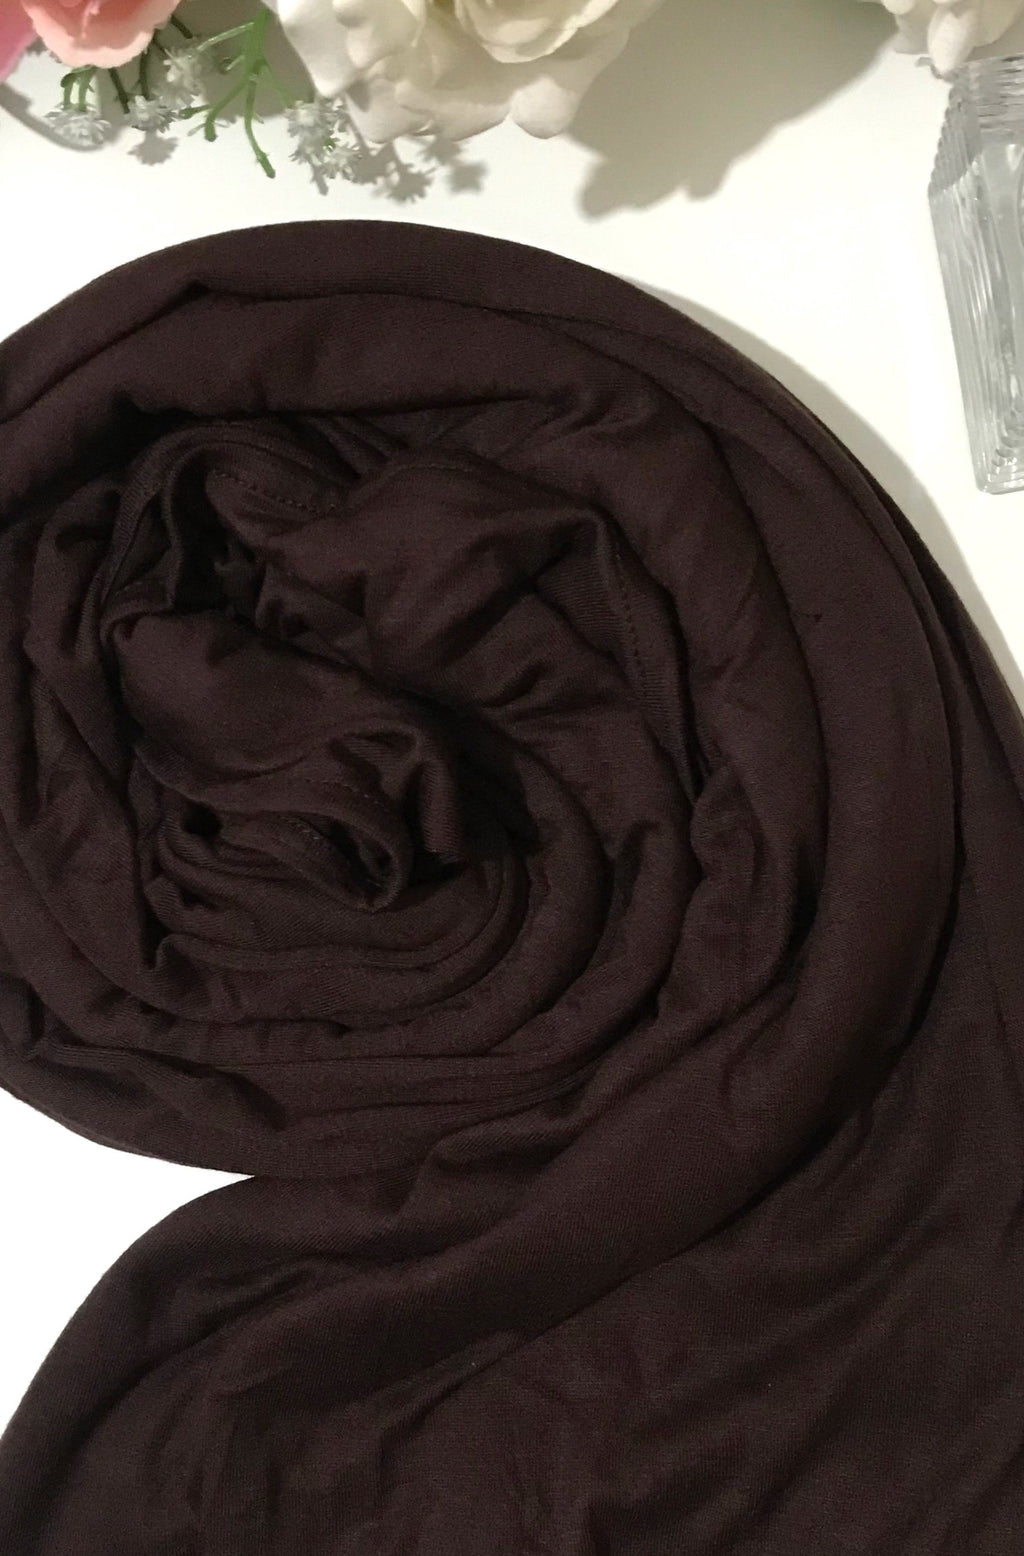 veil virtue jersey hijab cocoa dark brown